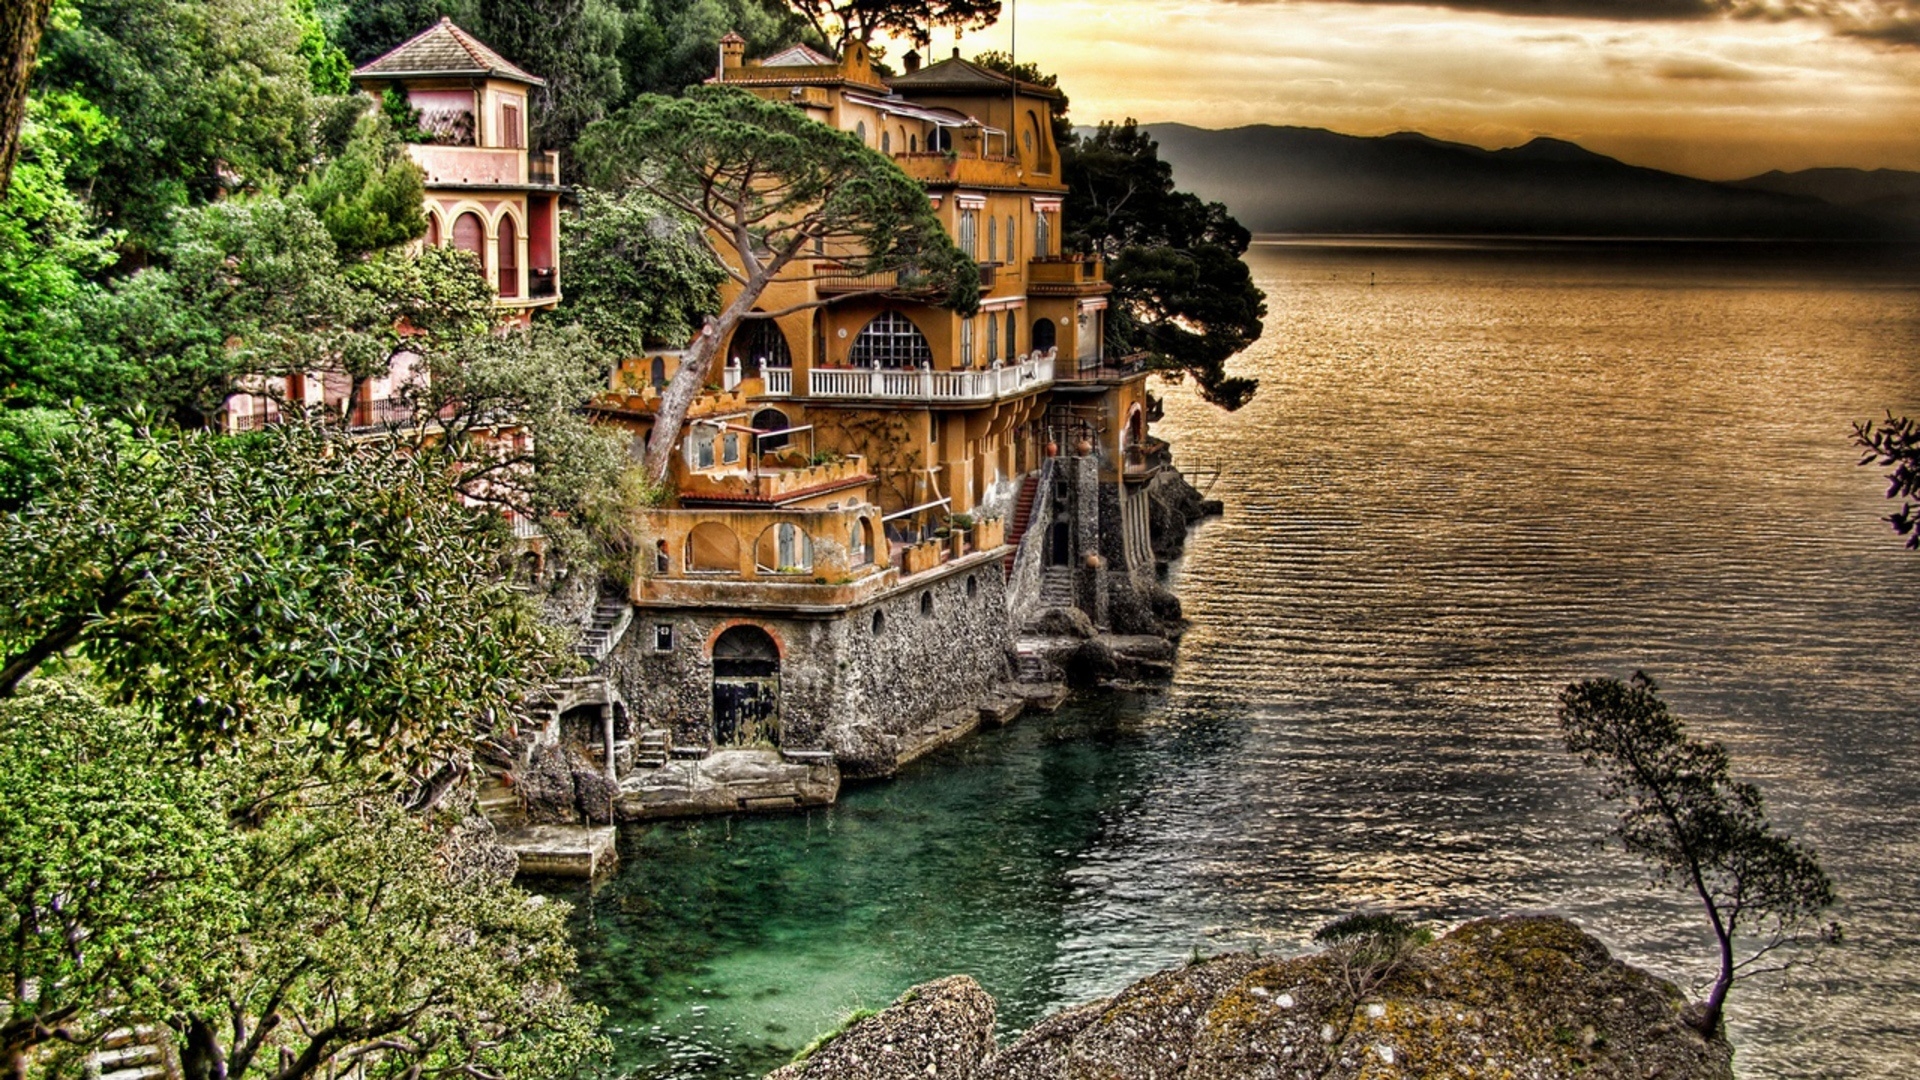 Portofino Coast View for 1920 x 1080 HDTV 1080p resolution